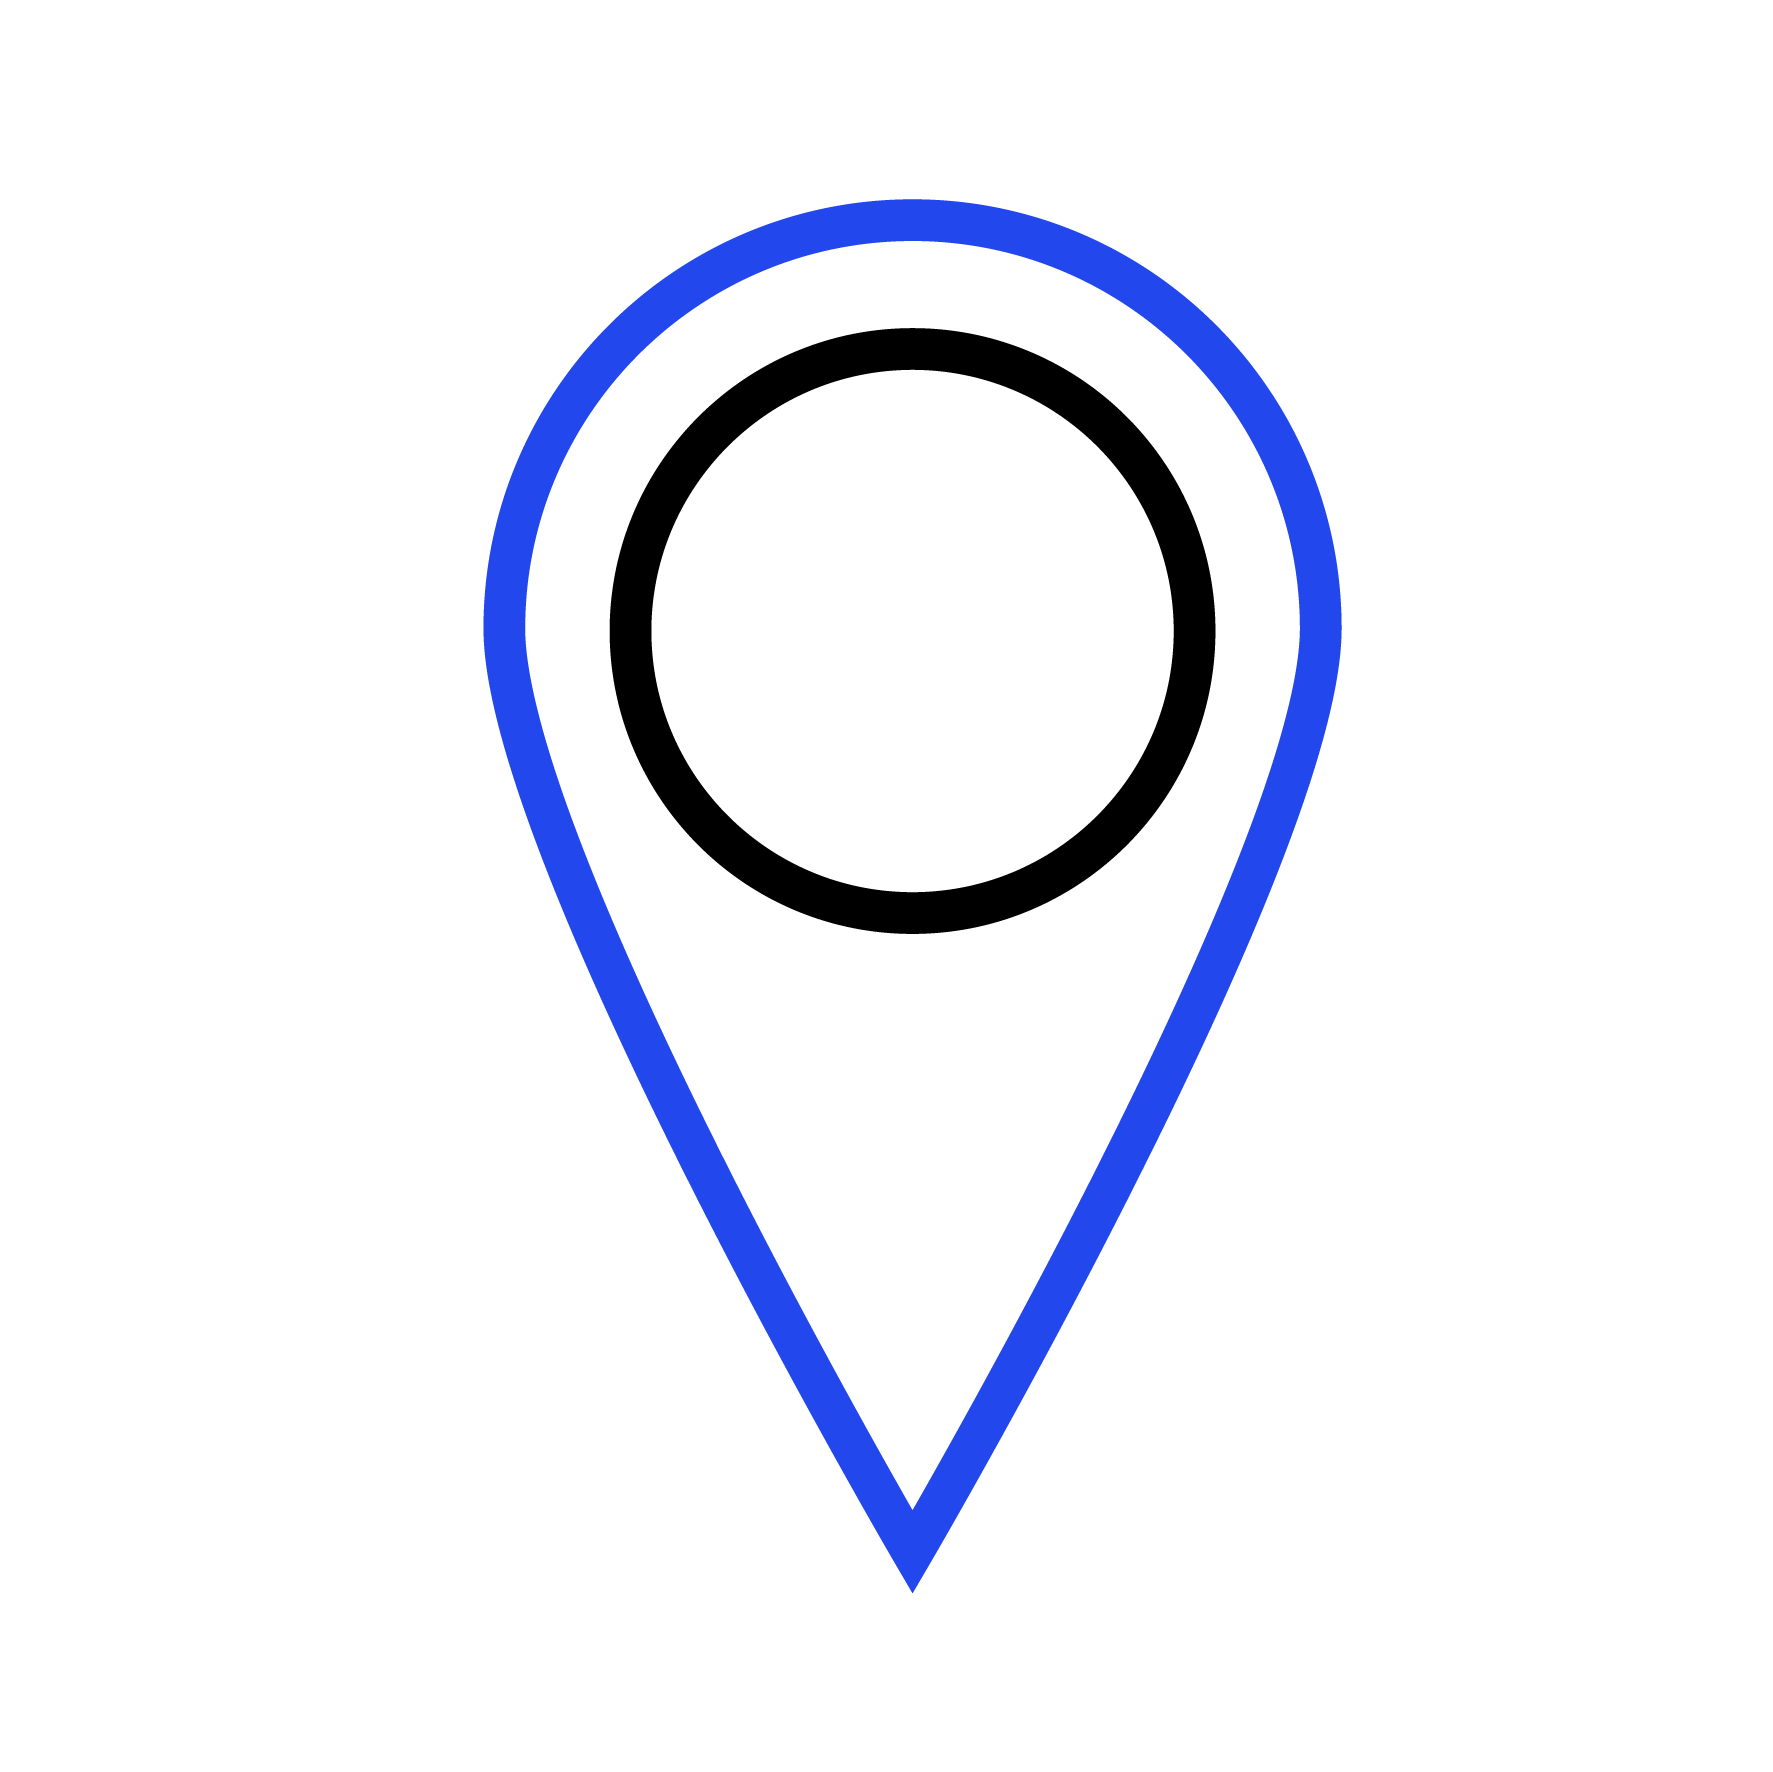 Location pinpoint symbol